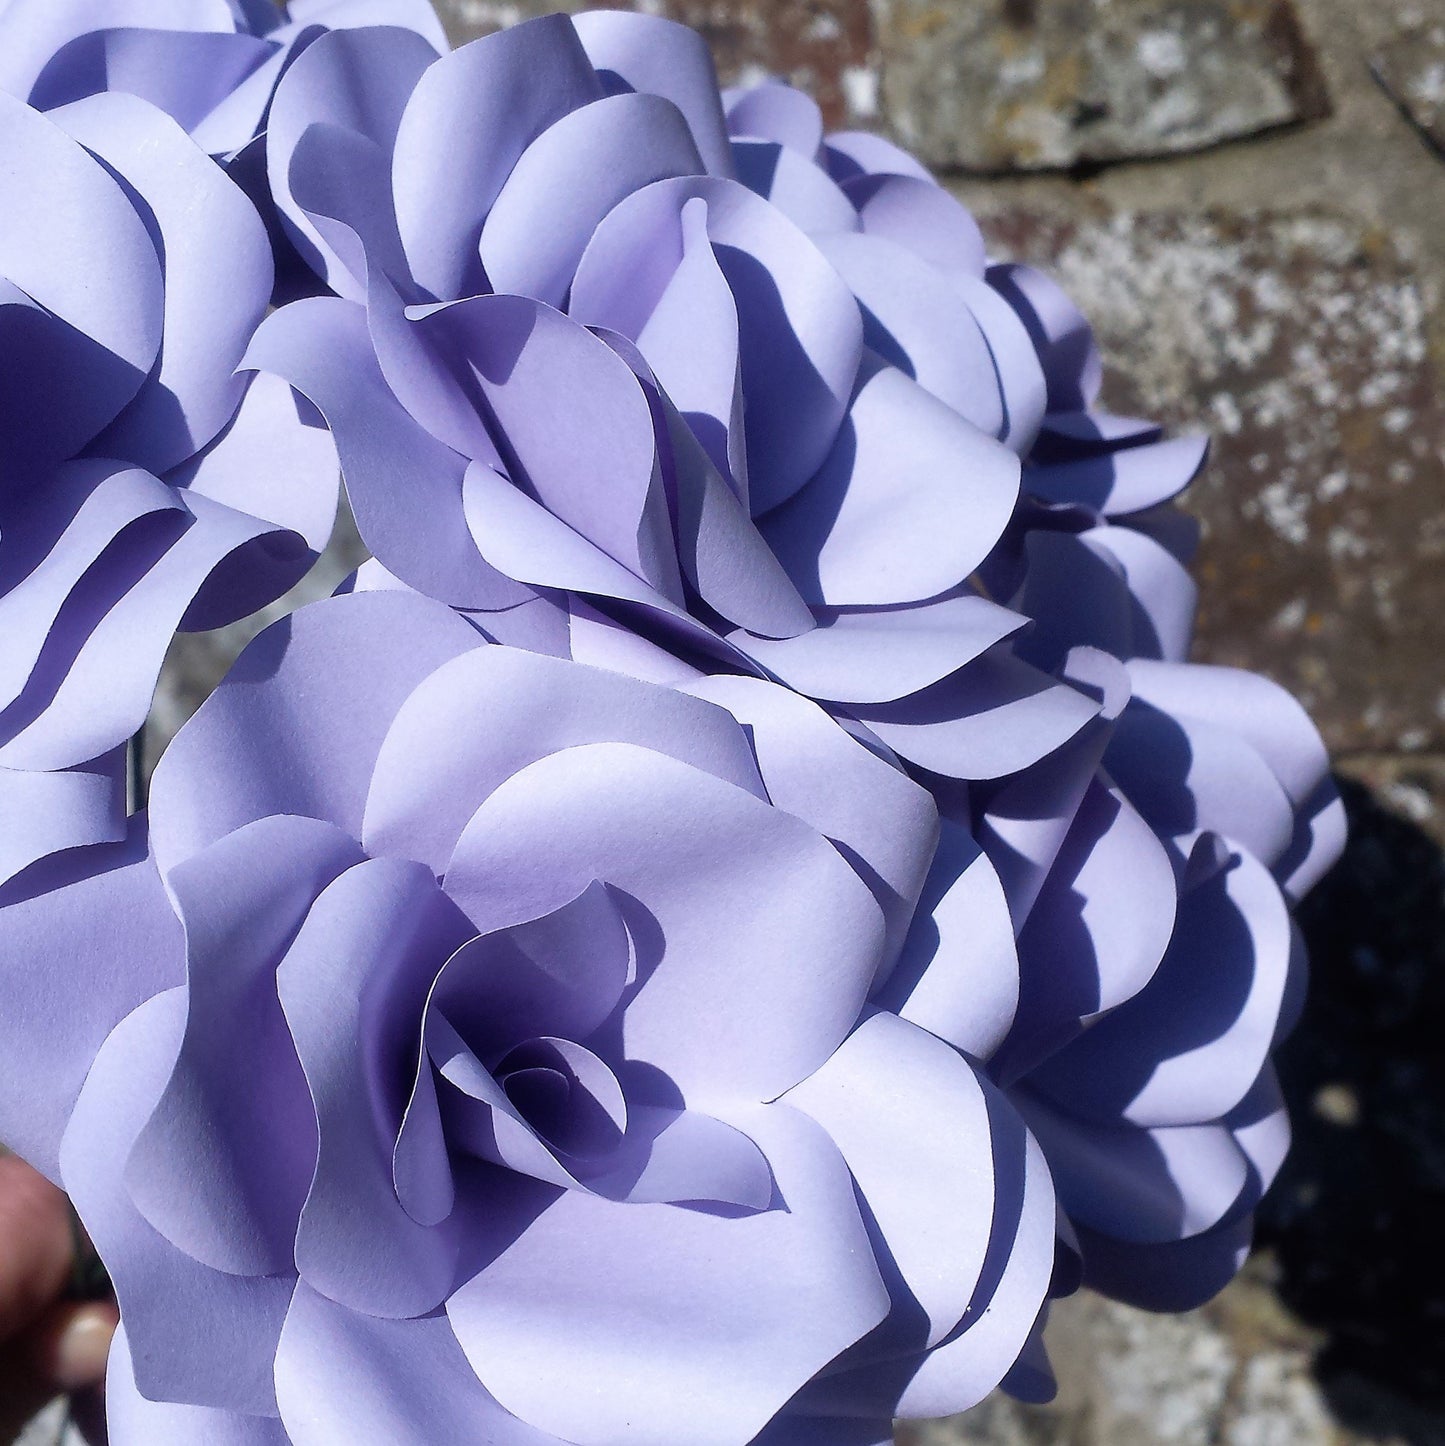 Lavender Paper Flowers